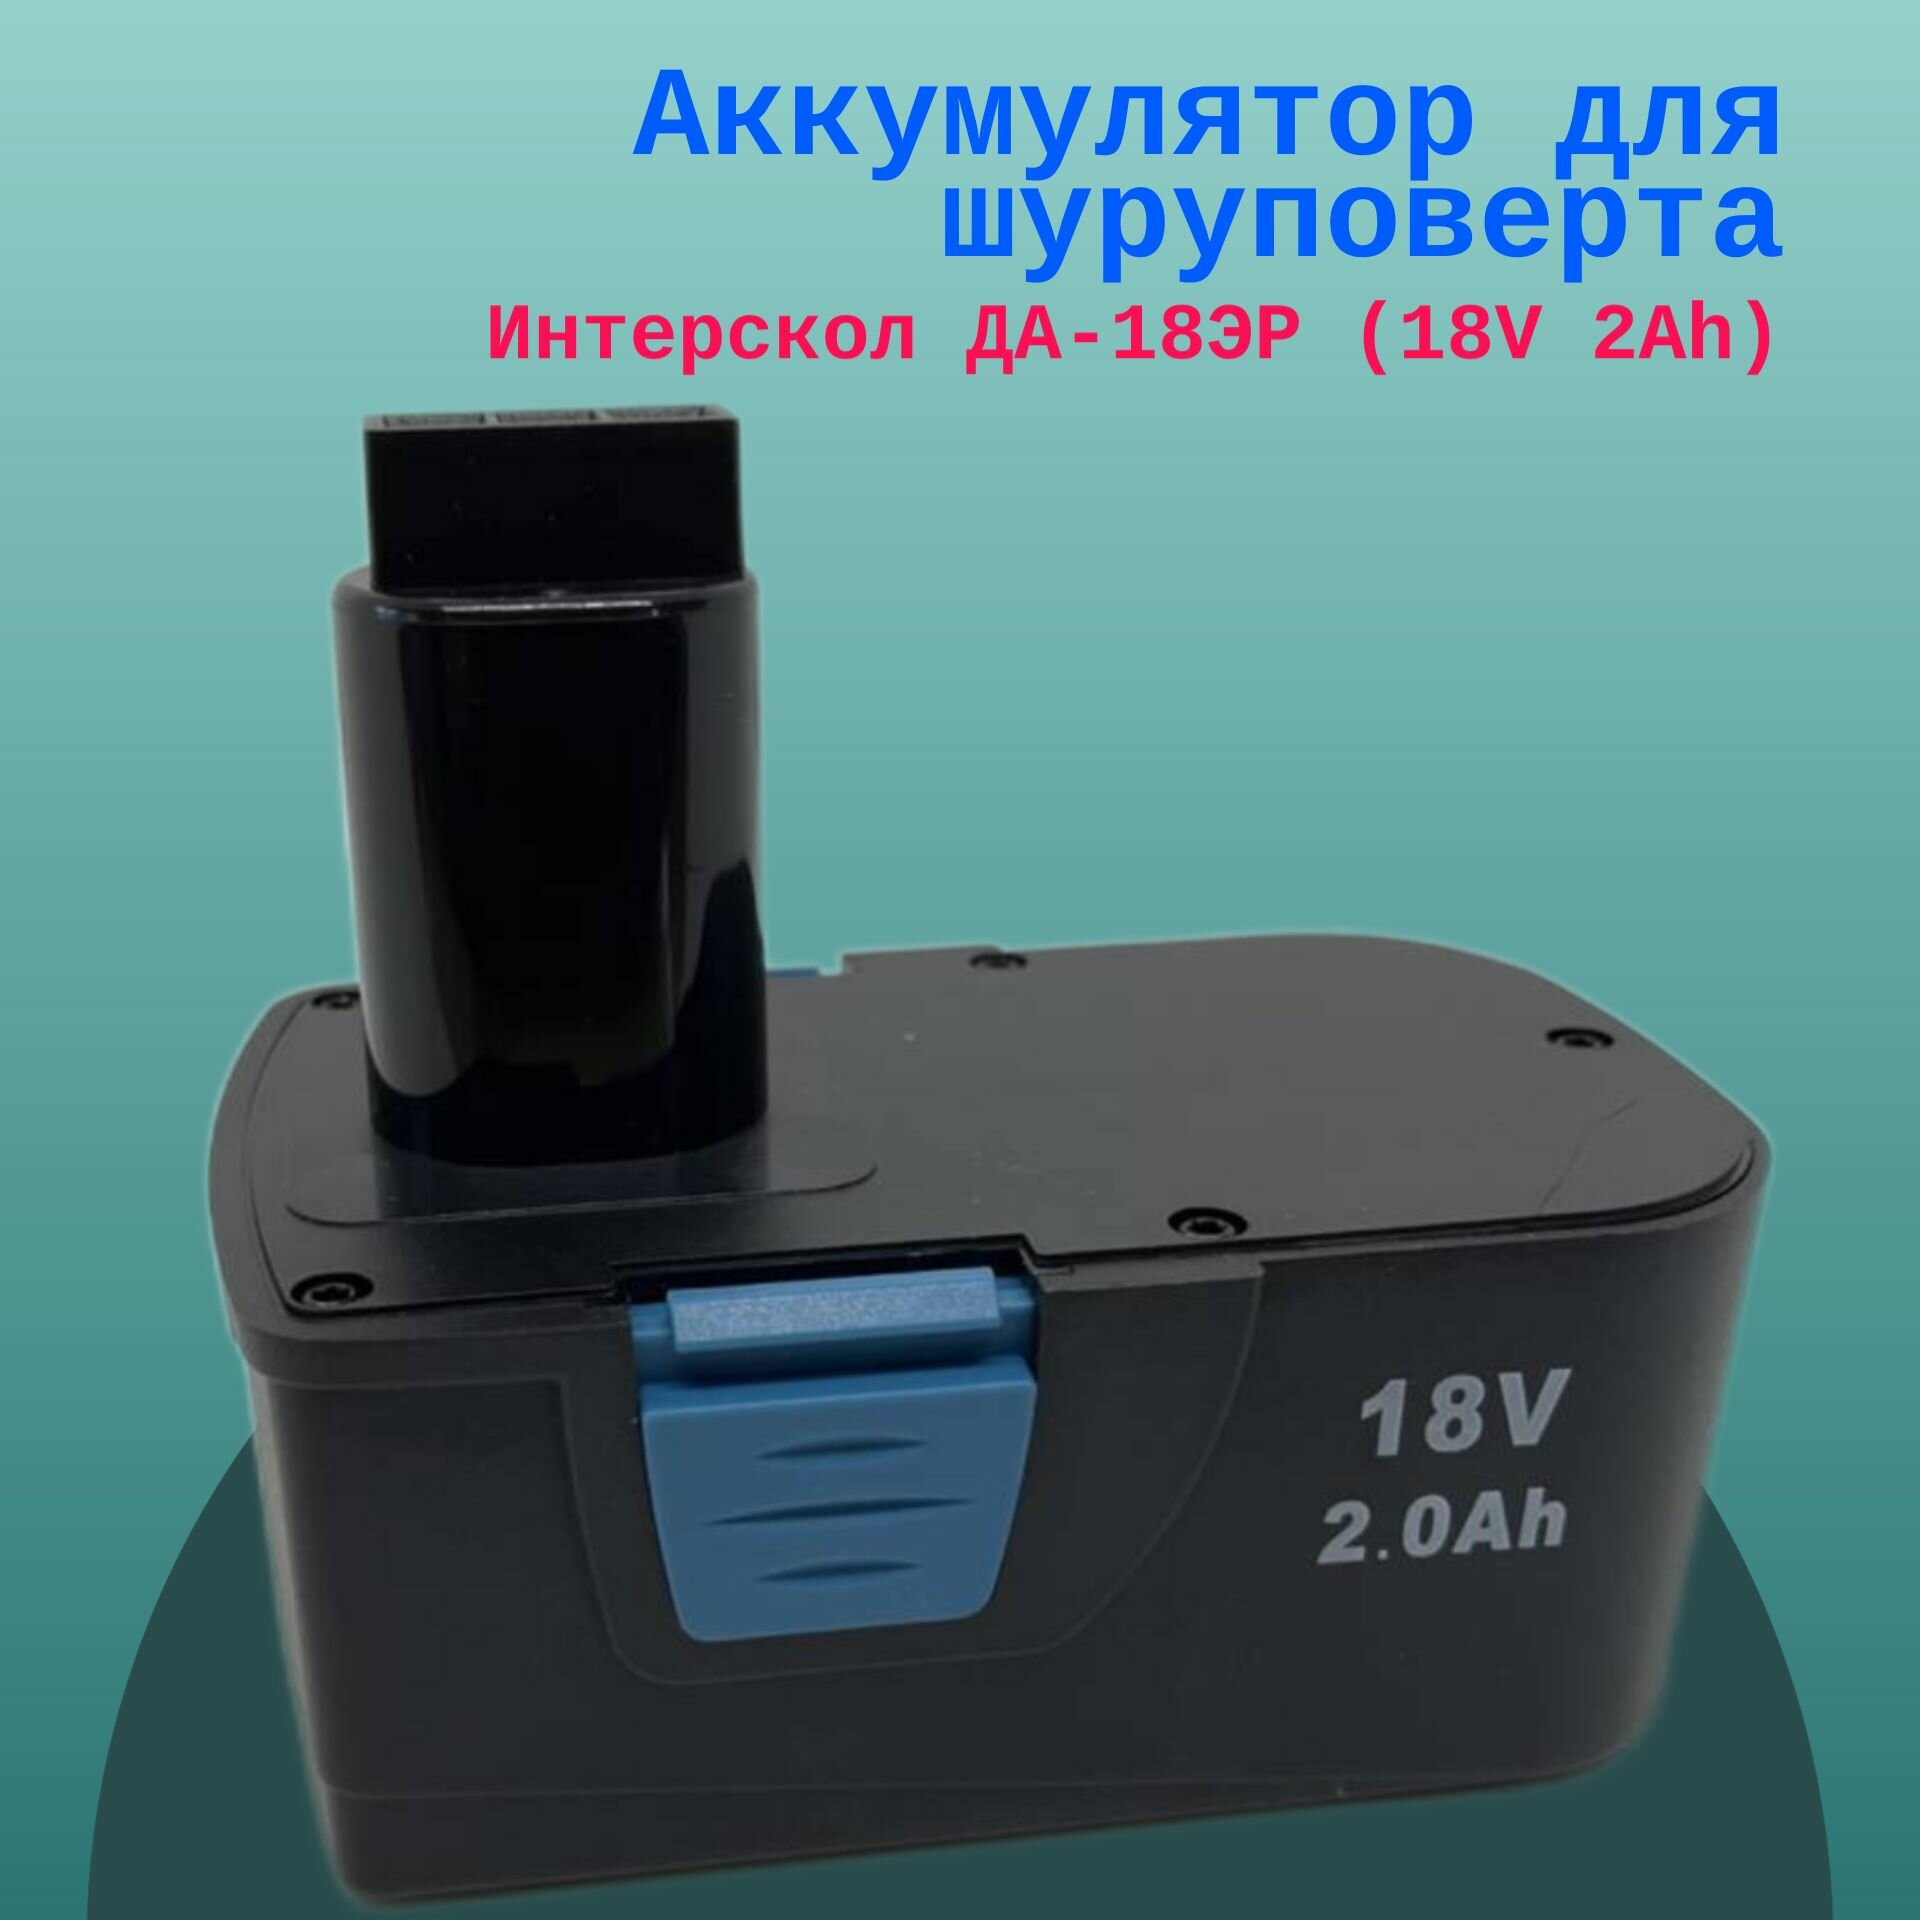 Аккумулятор для шуруповерта Интерскол ДА-18ЭР (18V 2Ah)